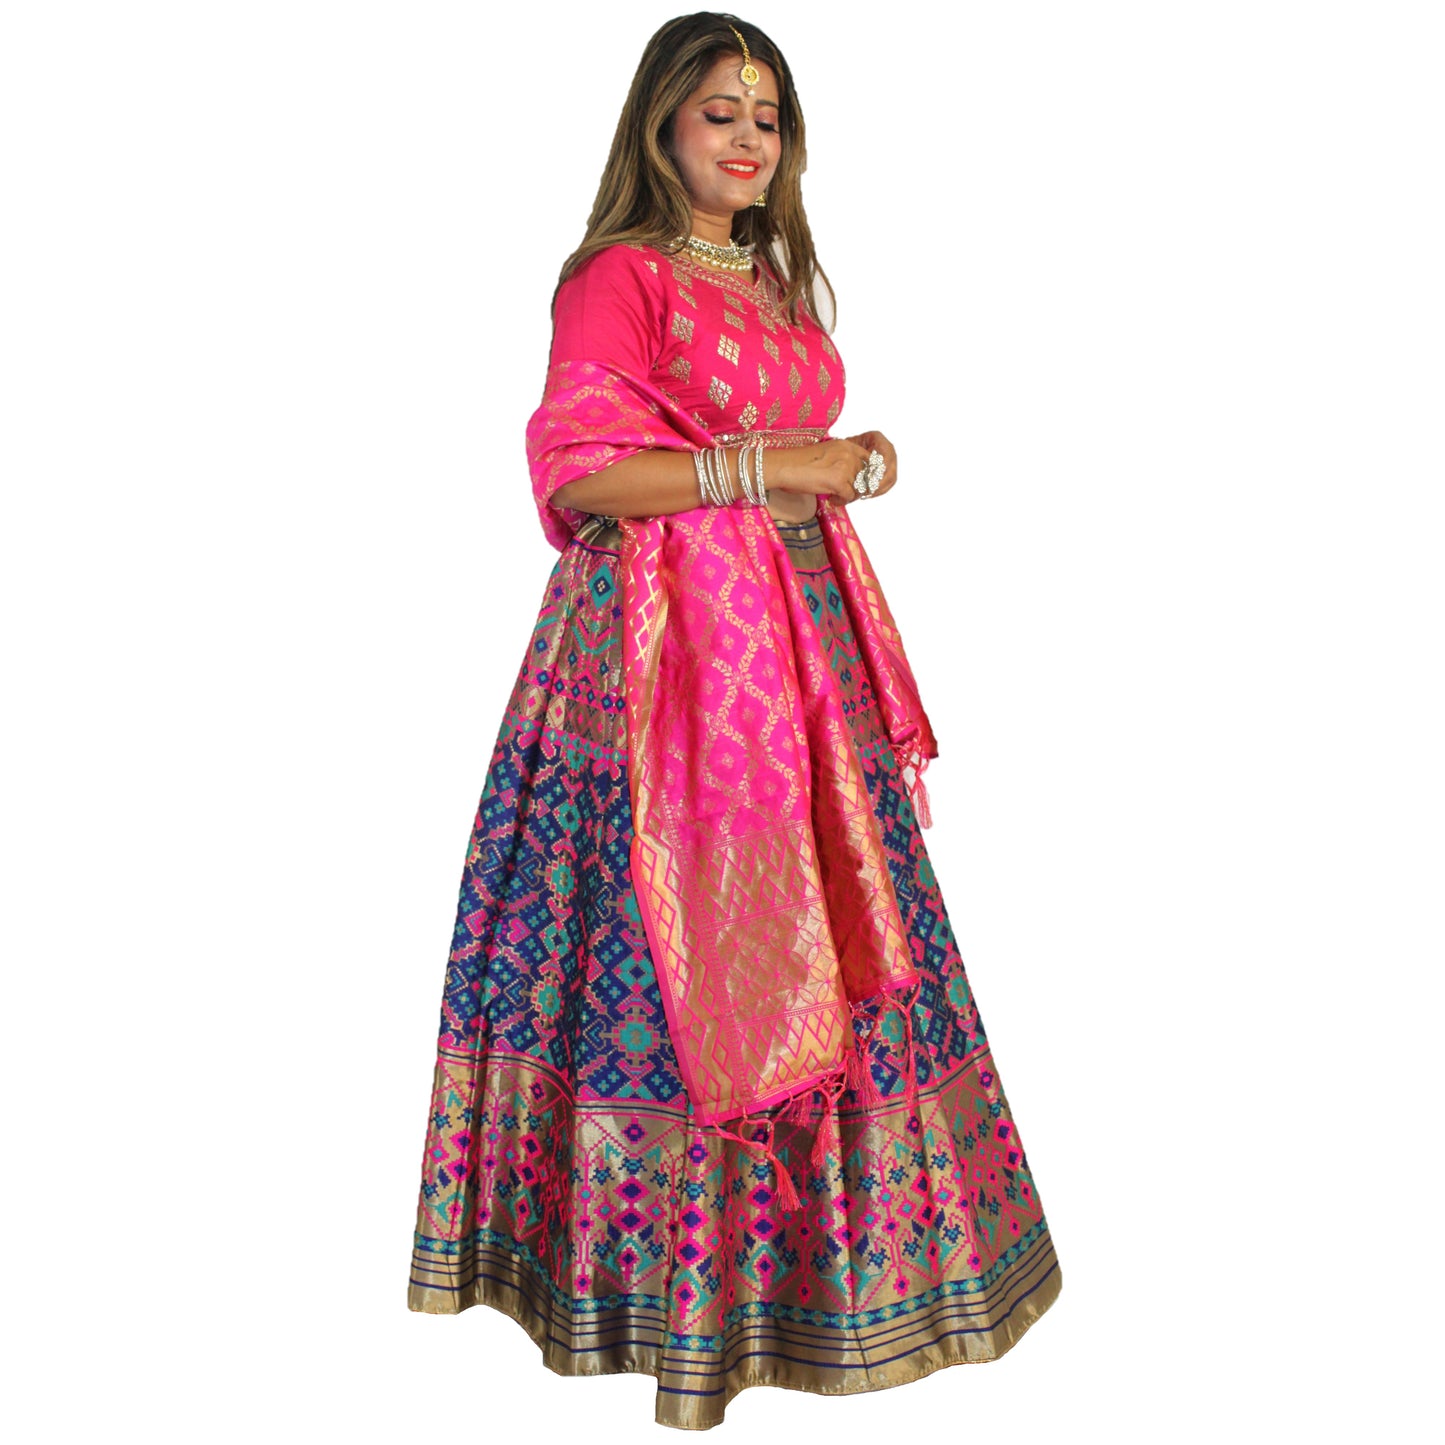 Maharani's Designer Pure Banarasi Silk Lehenga - Pink and Blue (M/L)